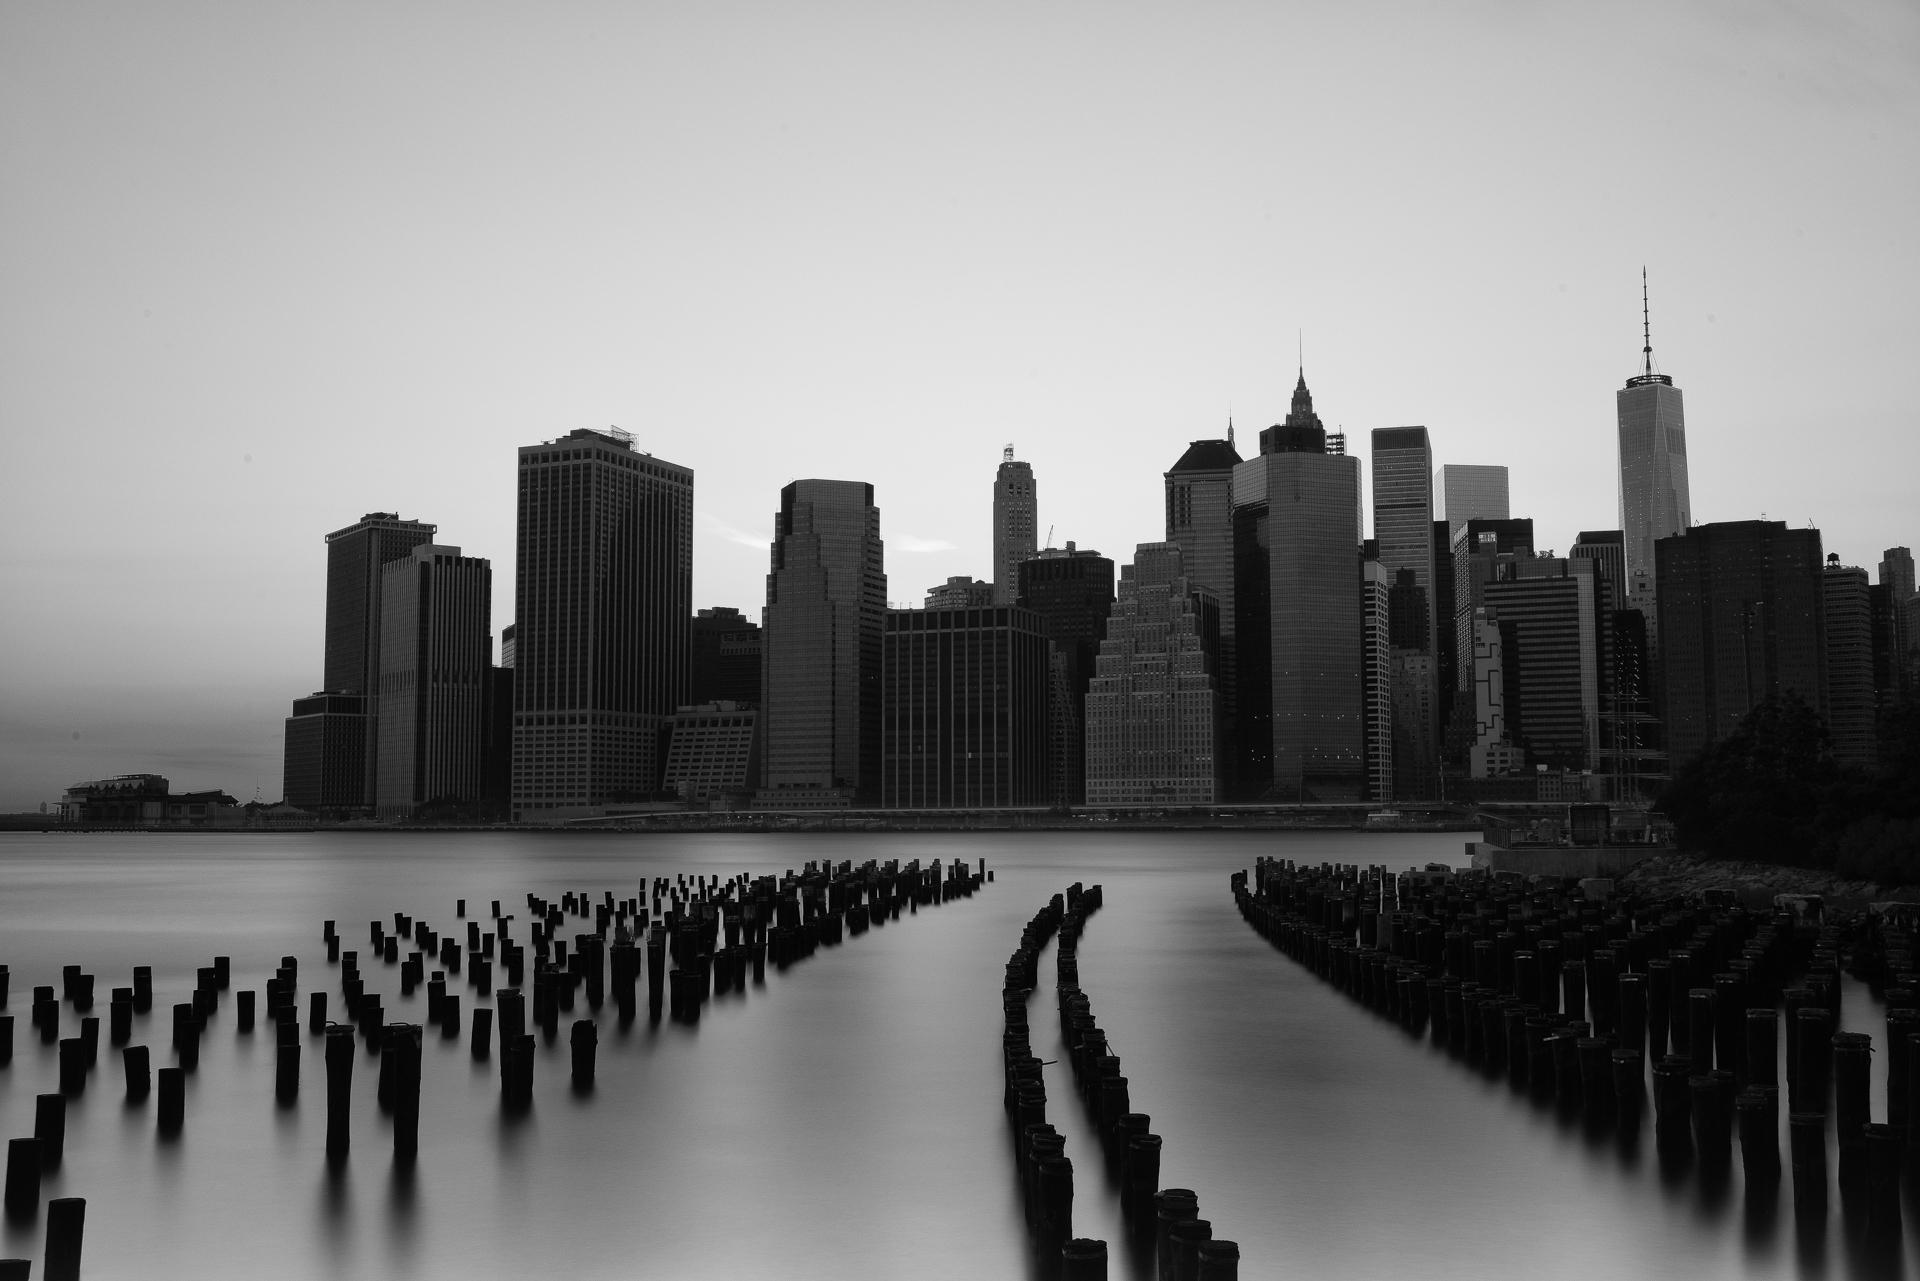 New York Photography Awards Winner - NYC @ Dusk